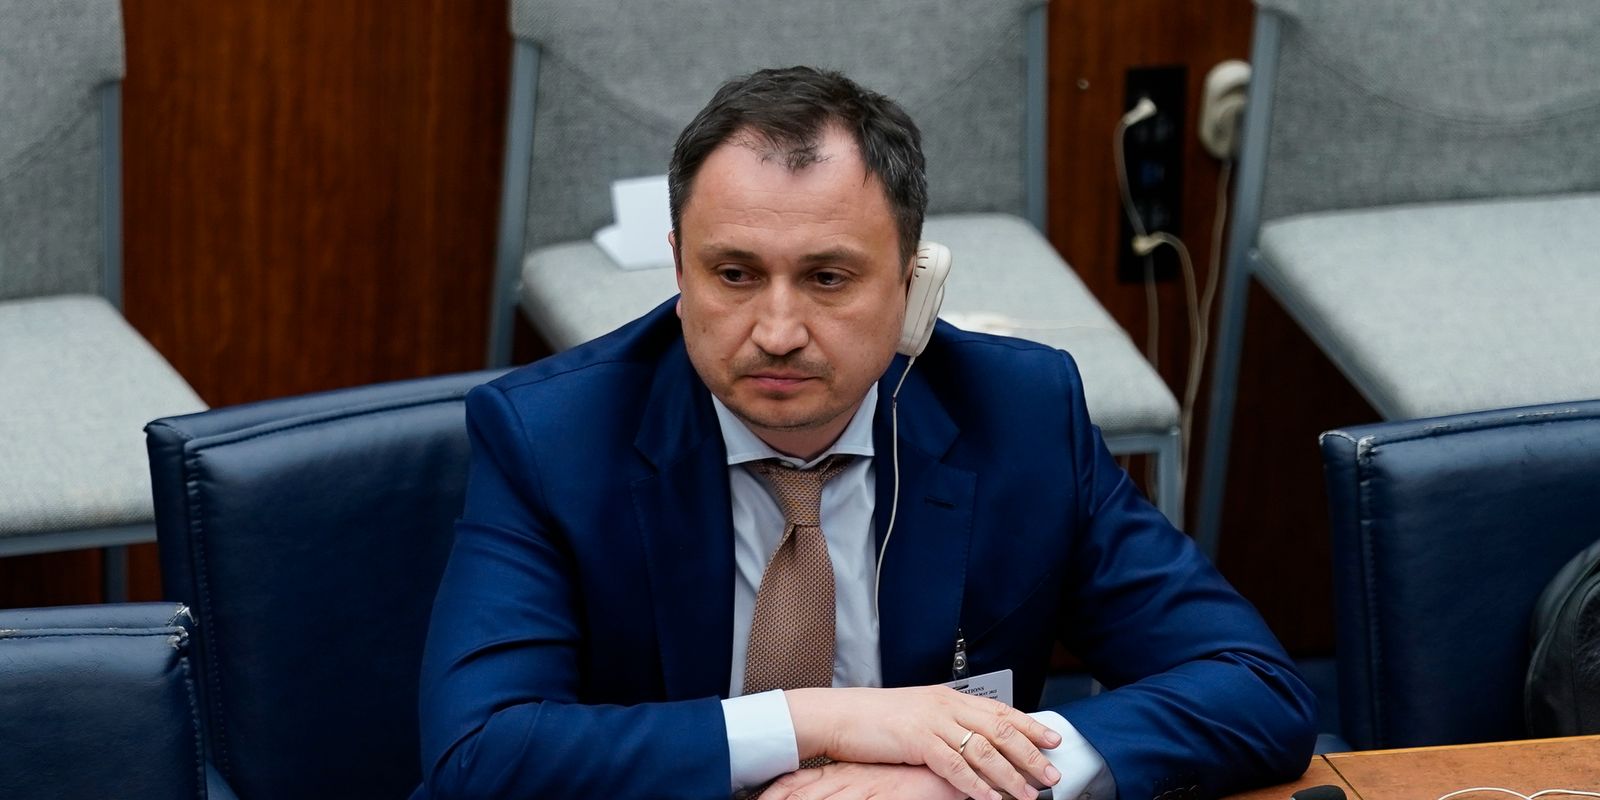 ukrainsk minister avgår efter korruptionsanklagelser